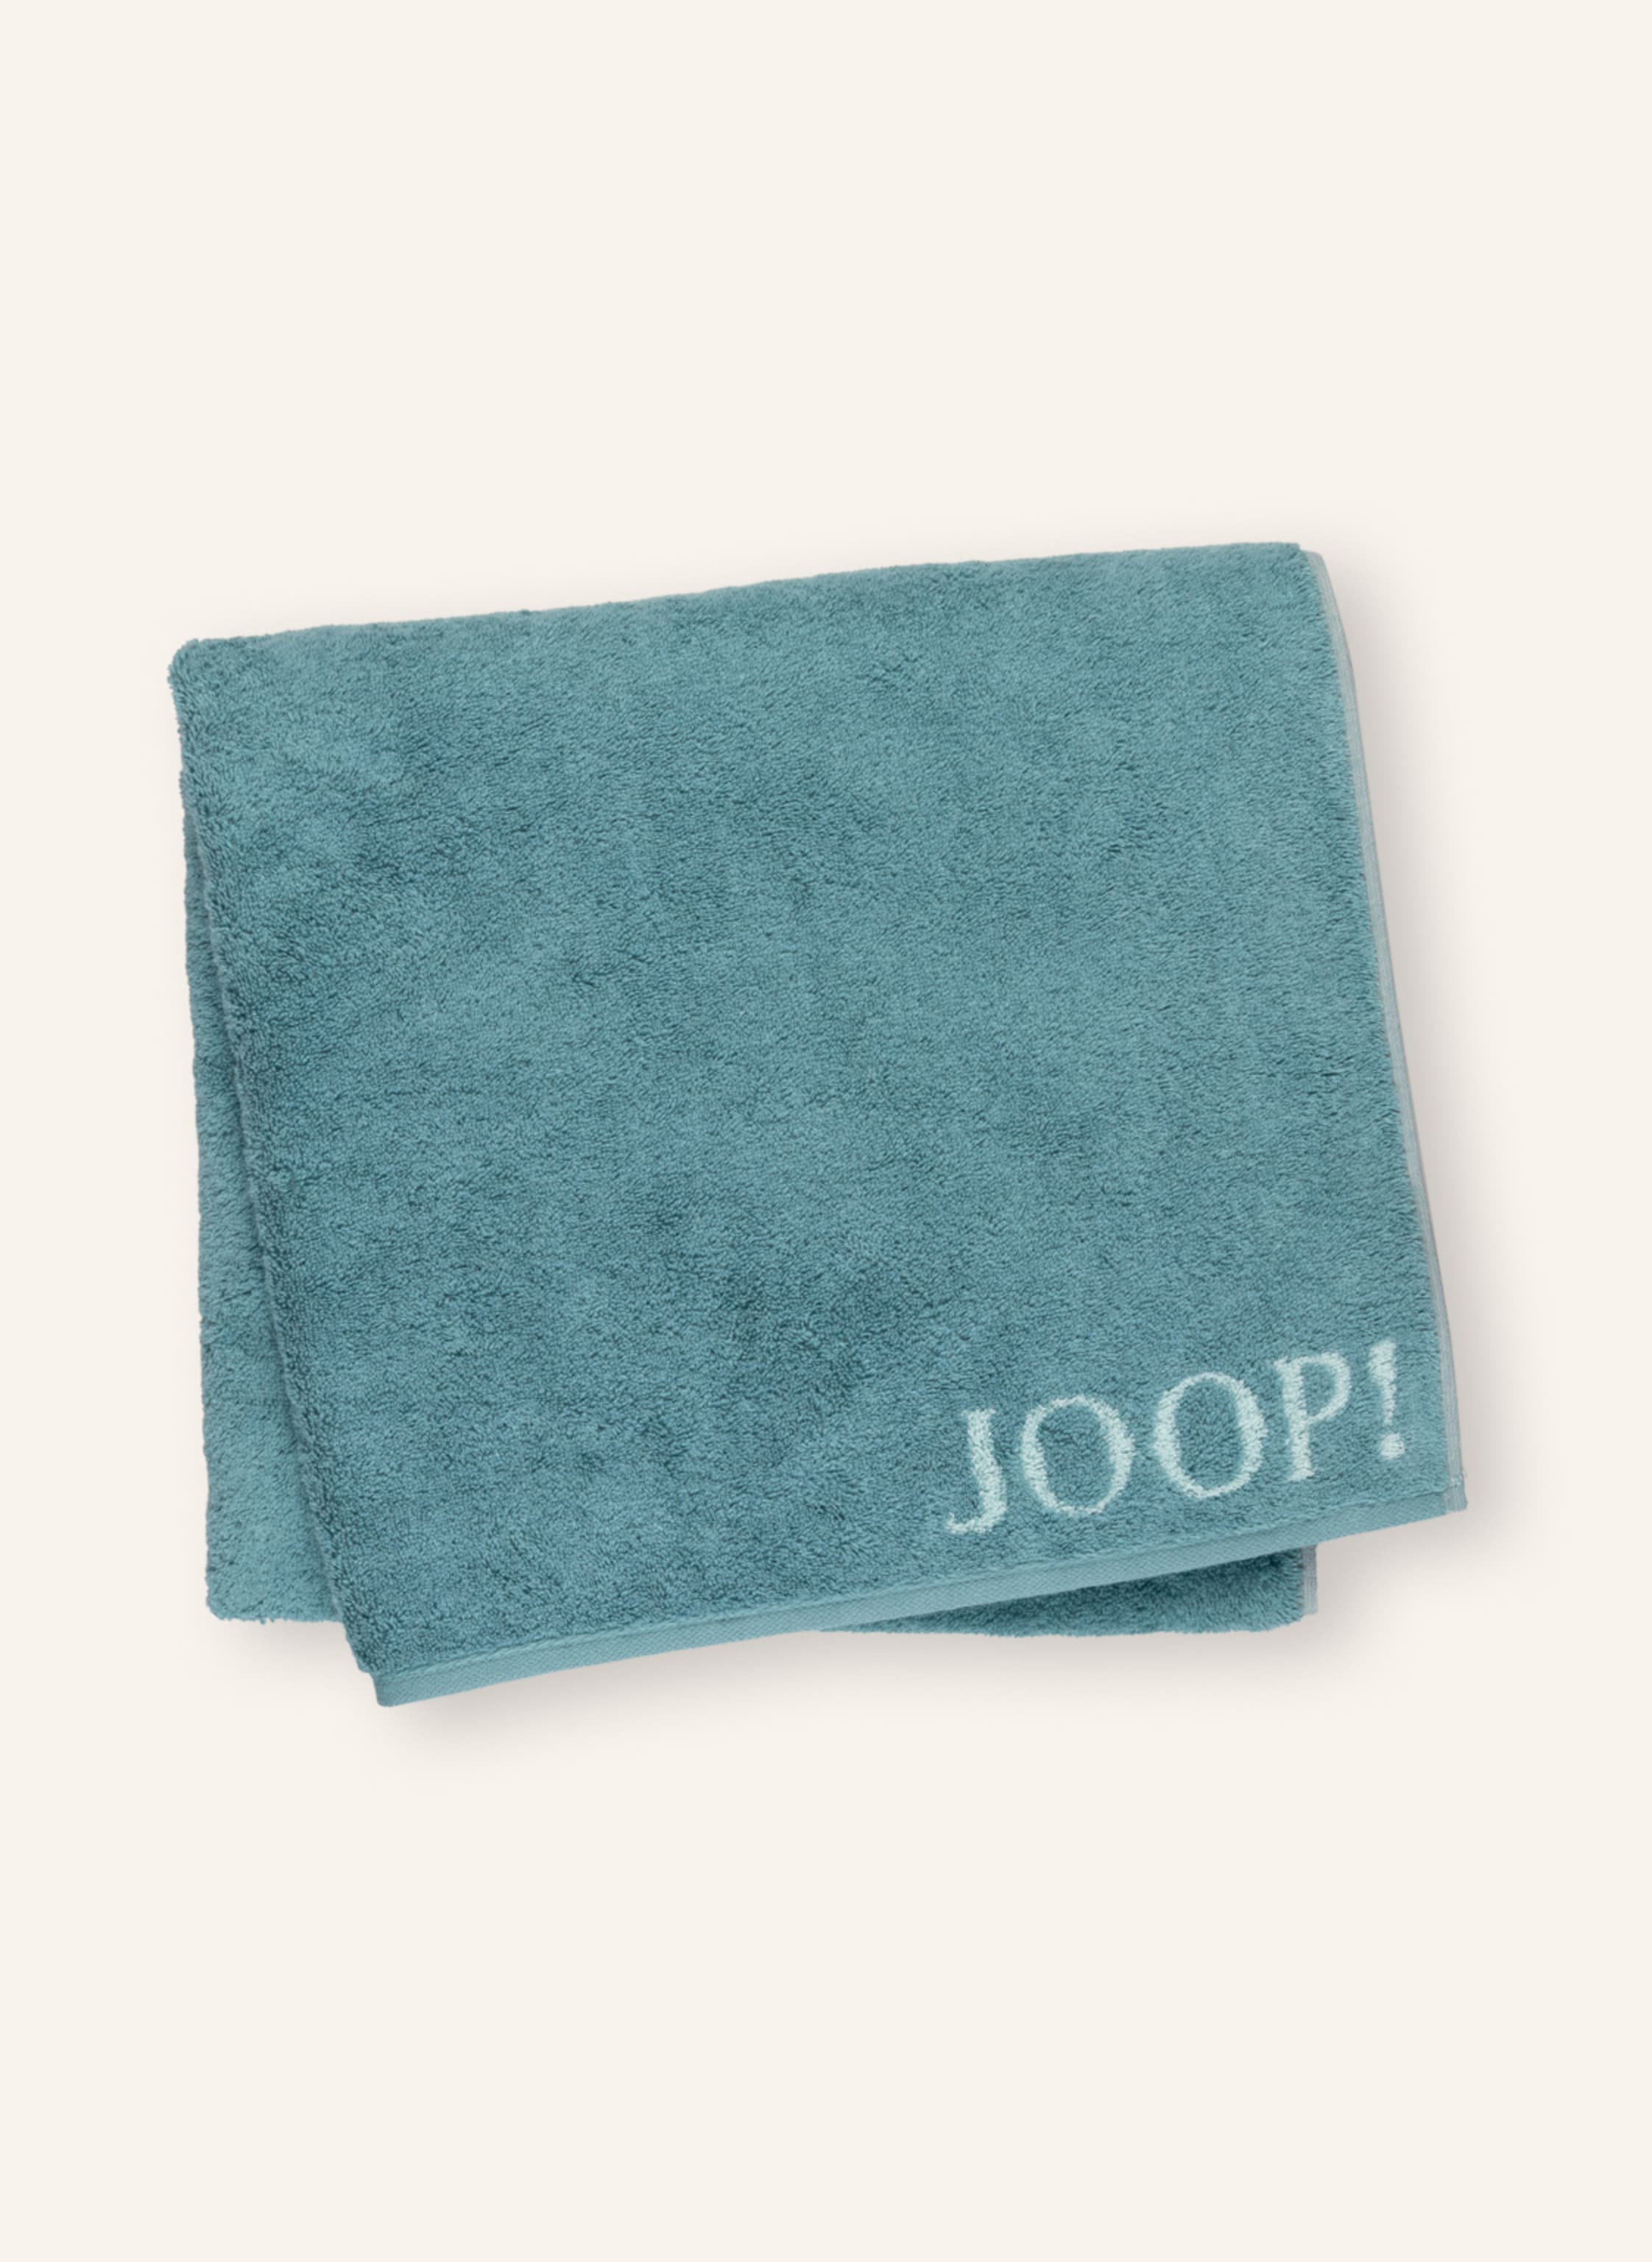 in CLASSIC JOOP! DOUBLEFACE mint towel Bath teal/